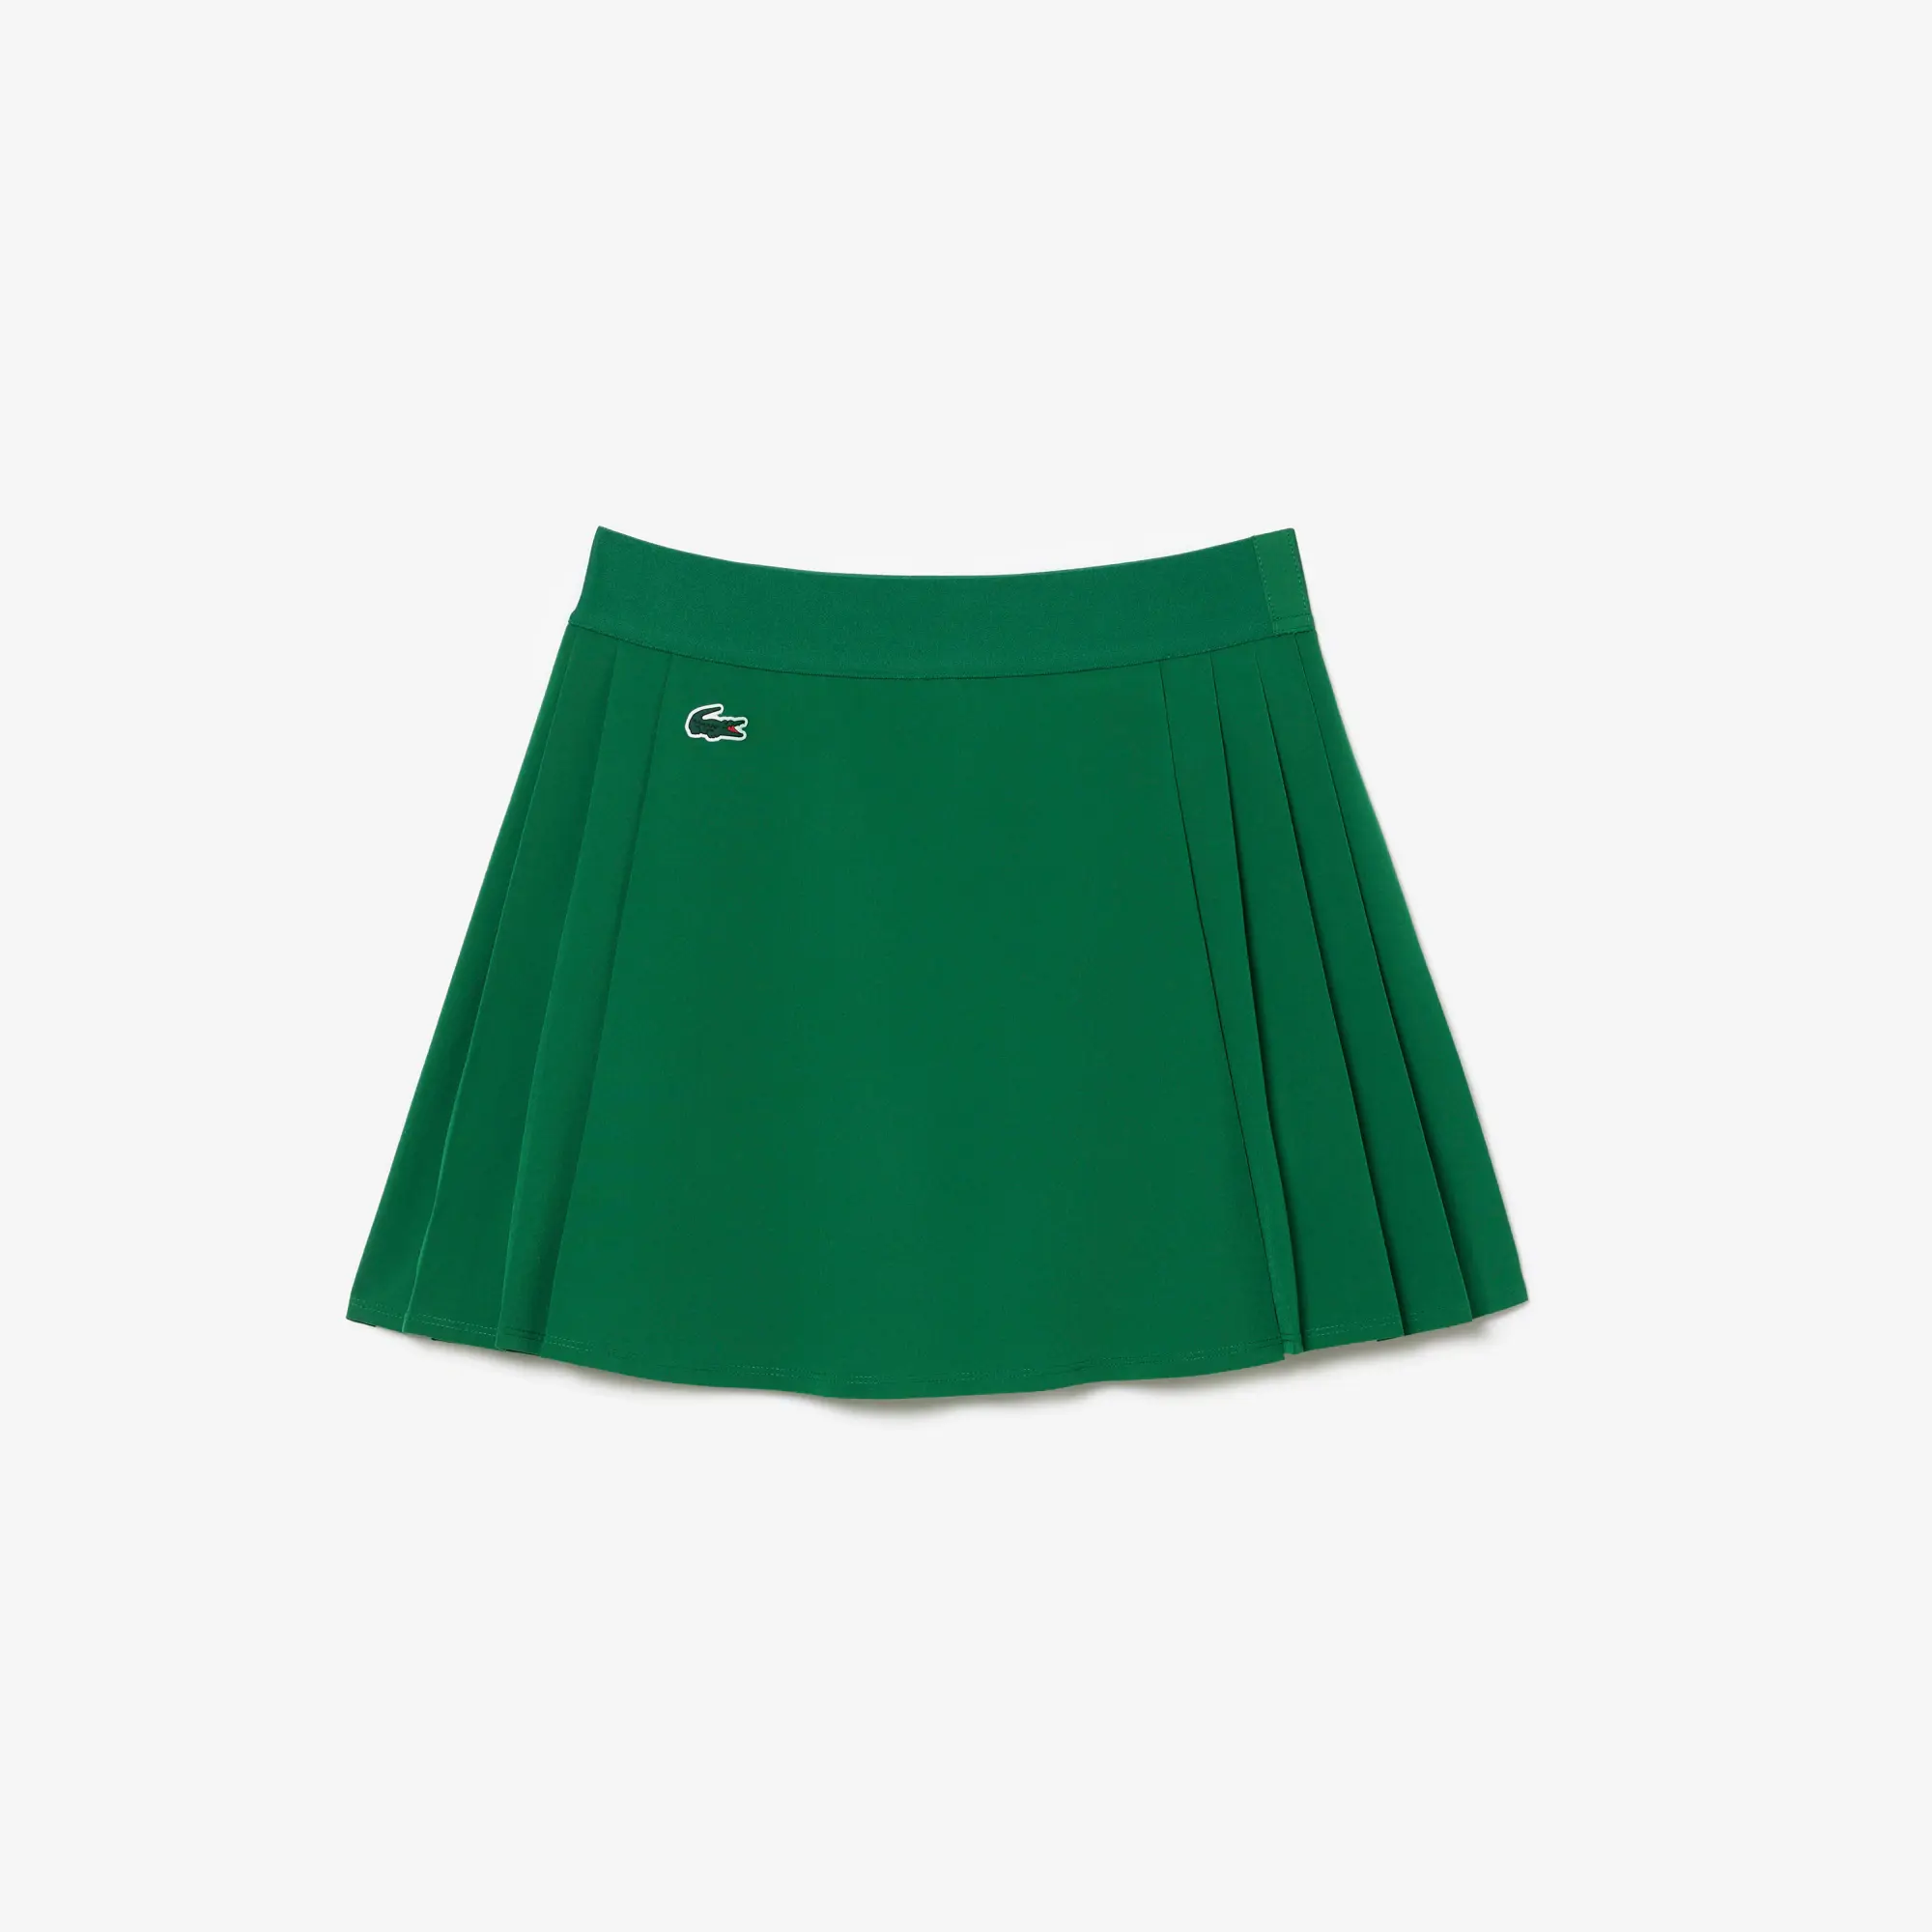 Lacoste Women's SPORT Golf Skirt. 1